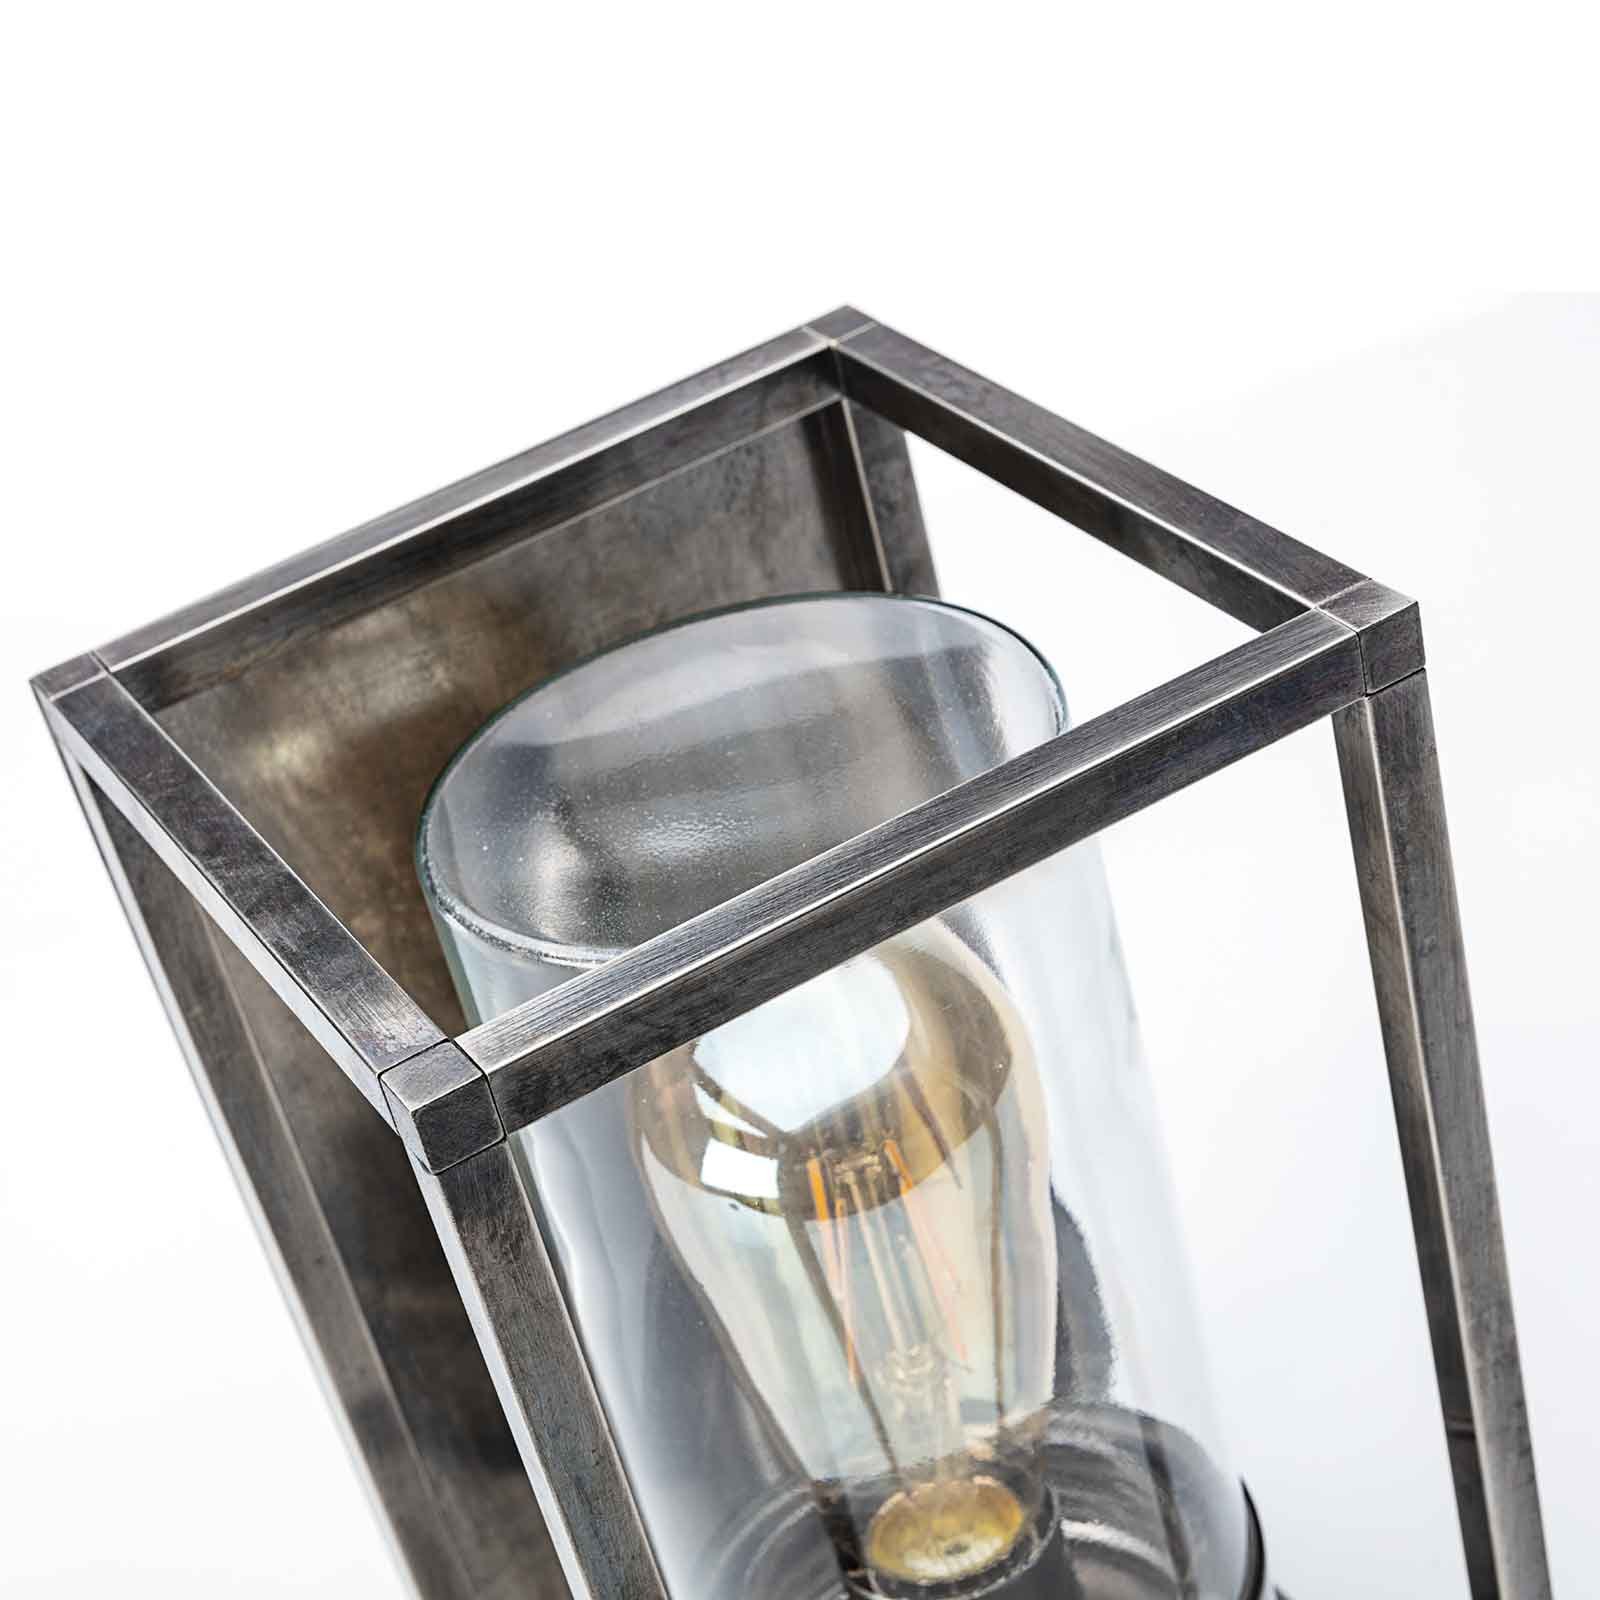 Buitenwandlamp Cubic³ 3365, antiek nikkel/helder